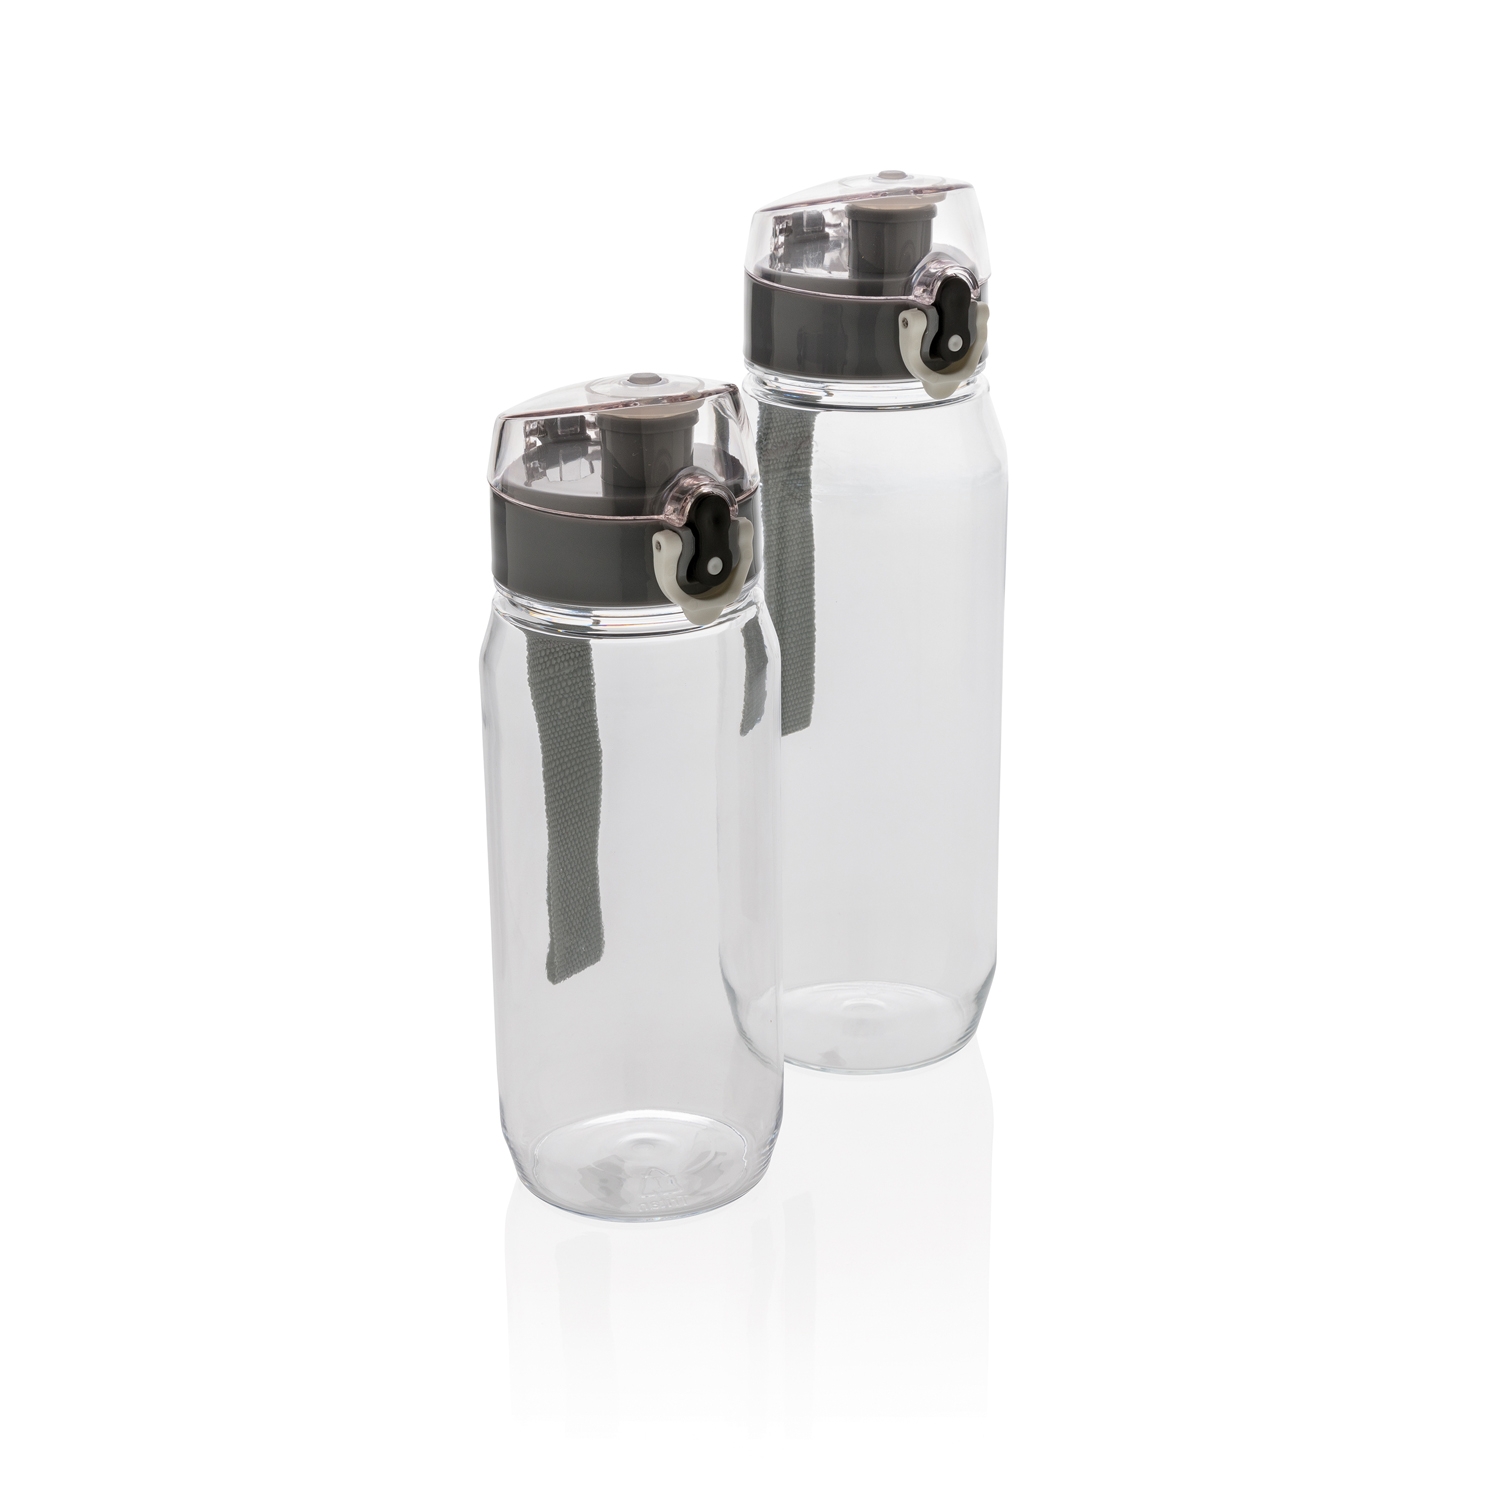 Бутылка для воды Tritan, 600 мл, прозрачный, пластик